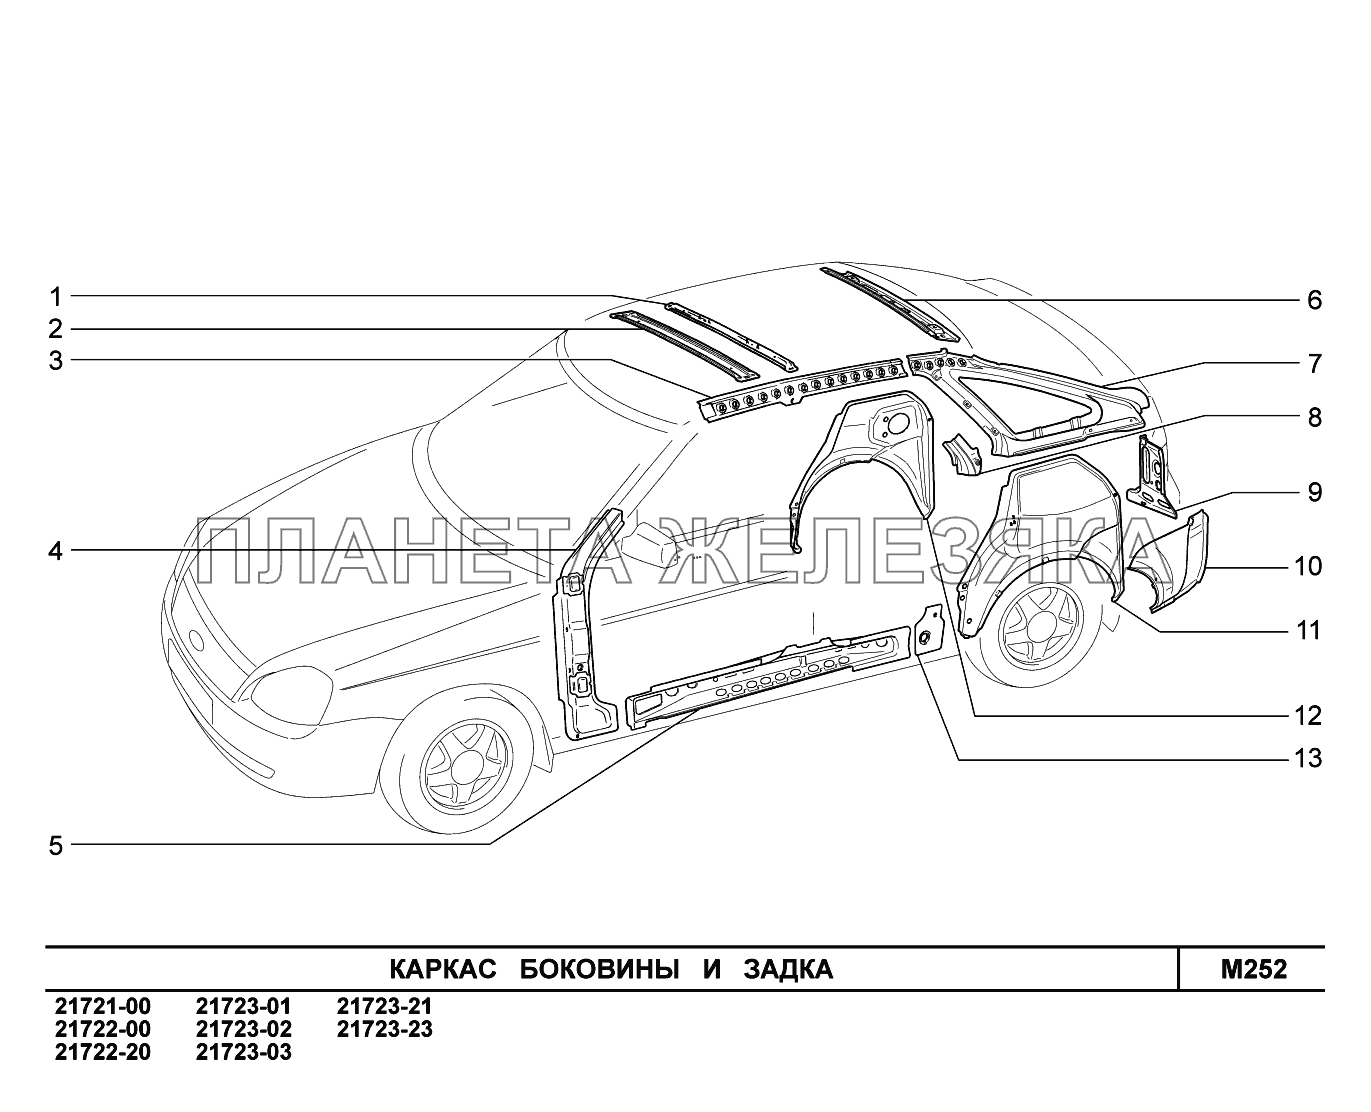 M252. Каркас боковины и задка ВАЗ-2170 